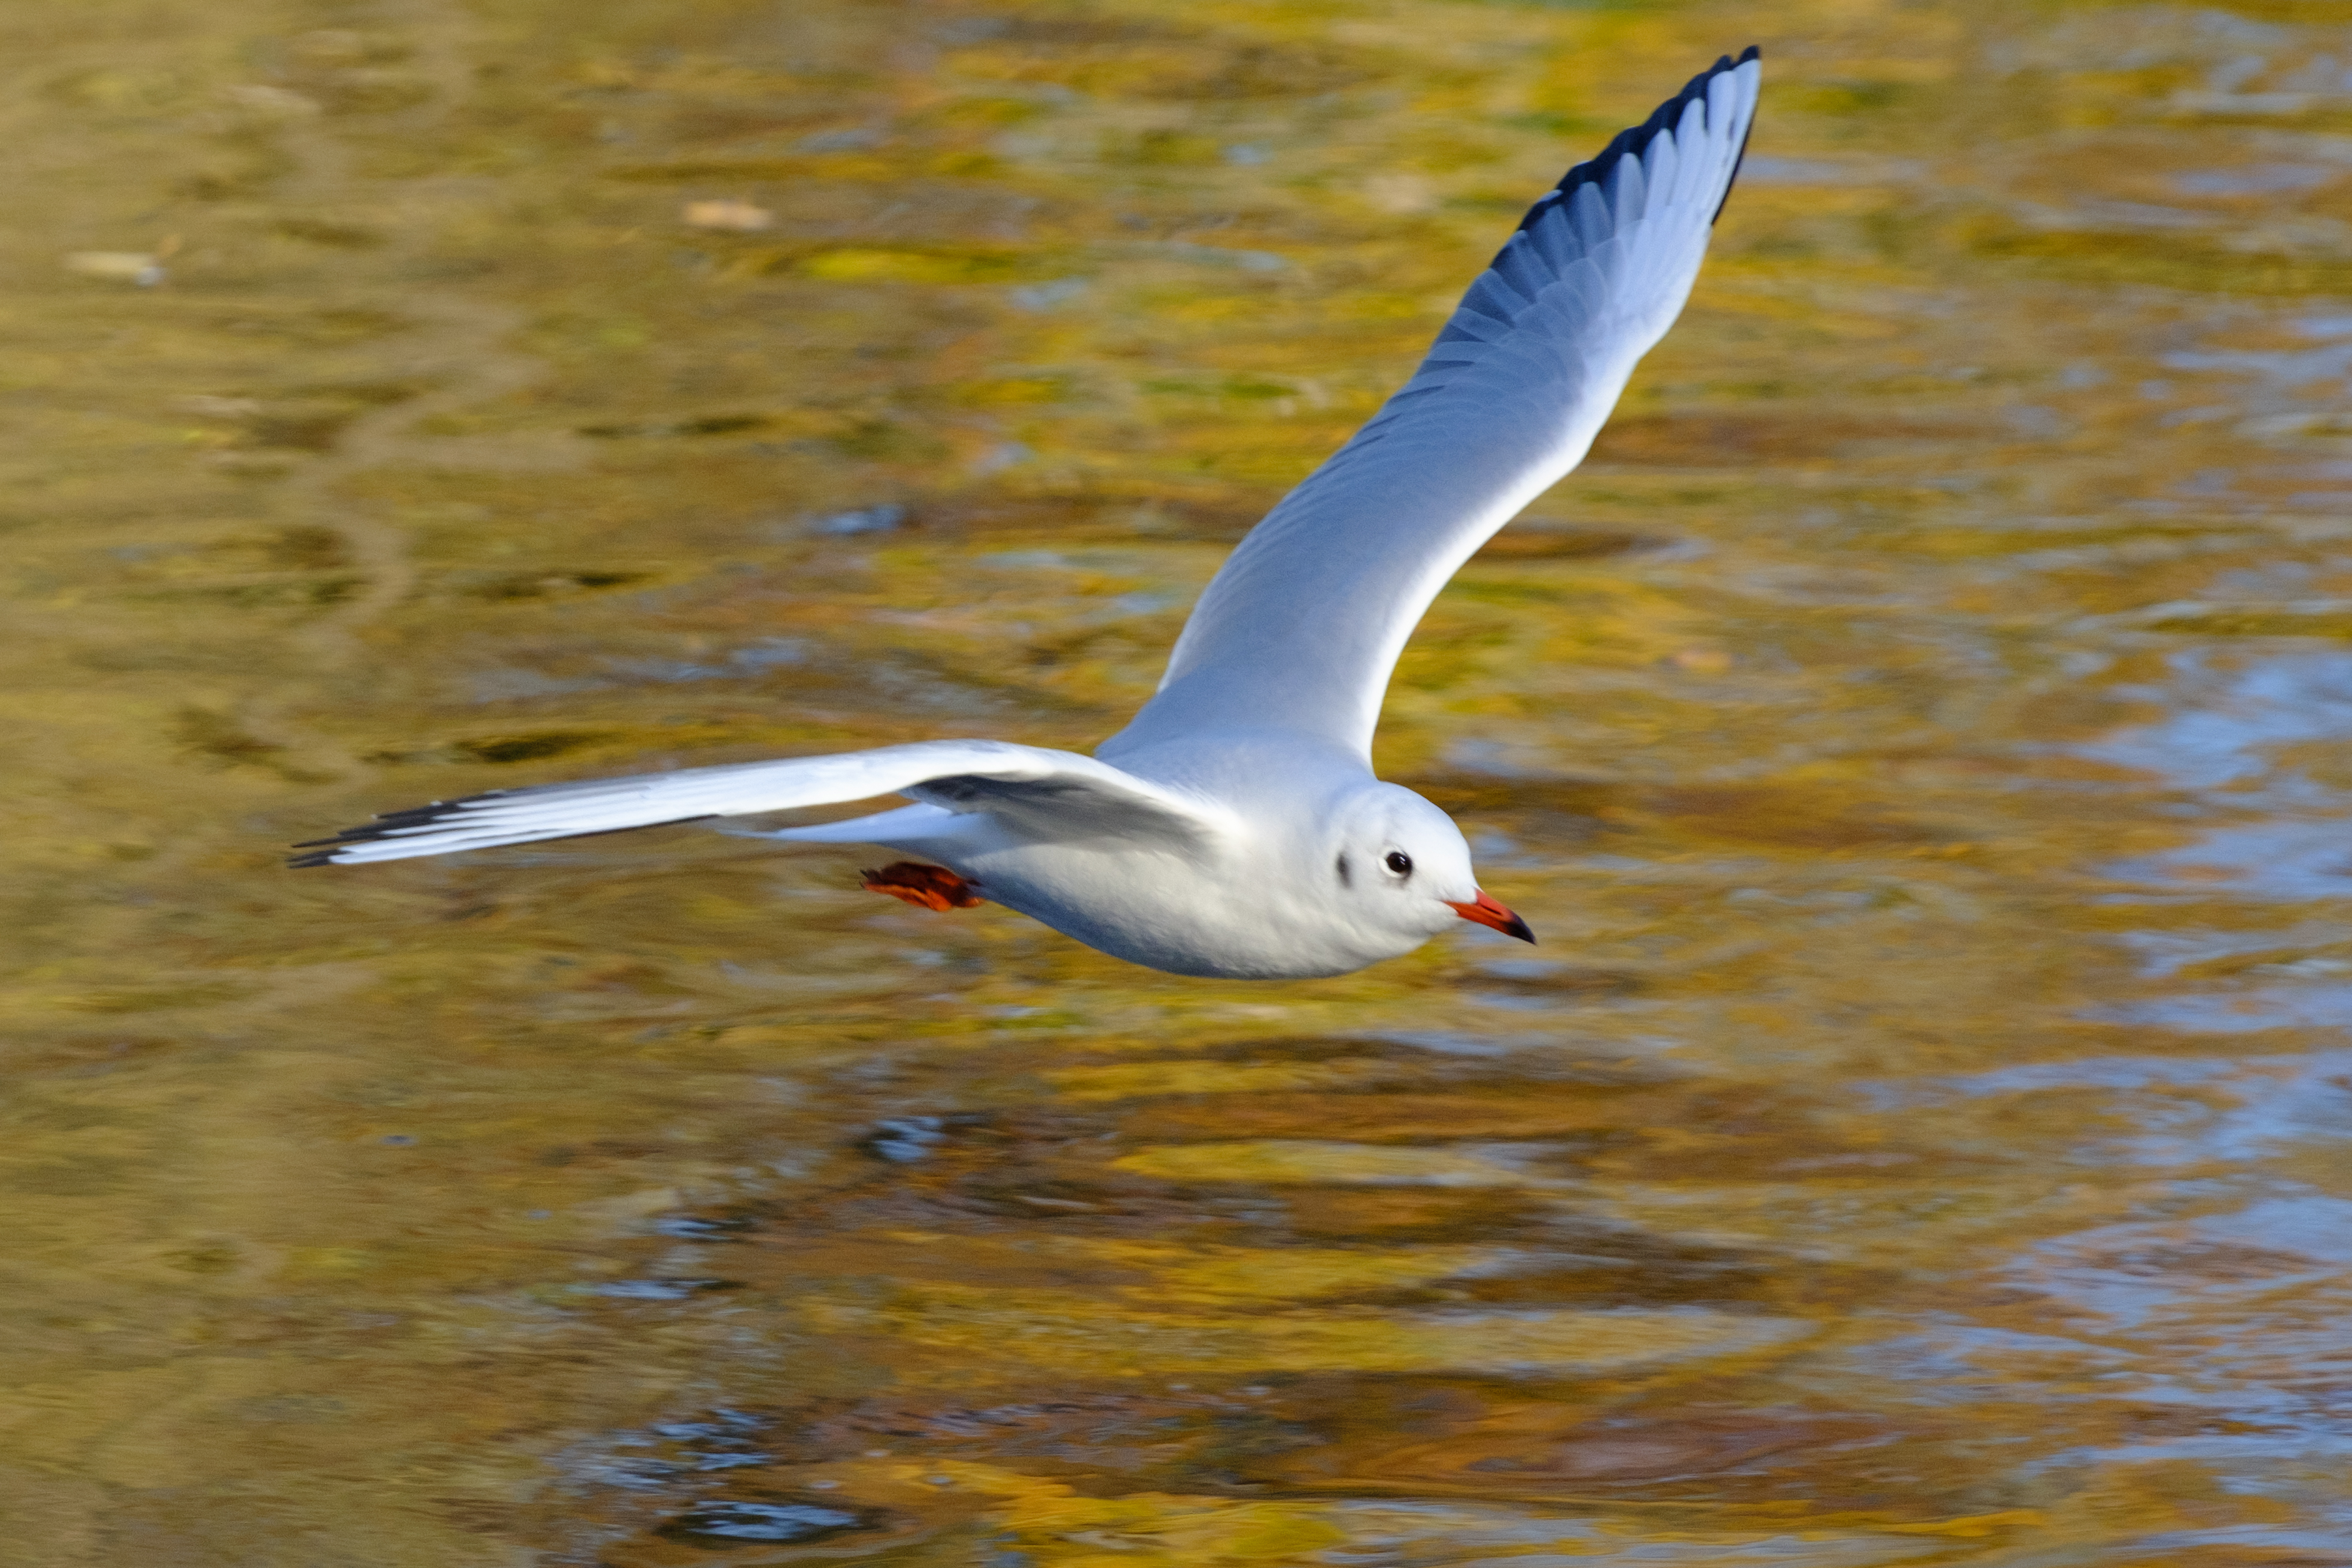 Fujifilm X-T5 sample image, seagull in flight